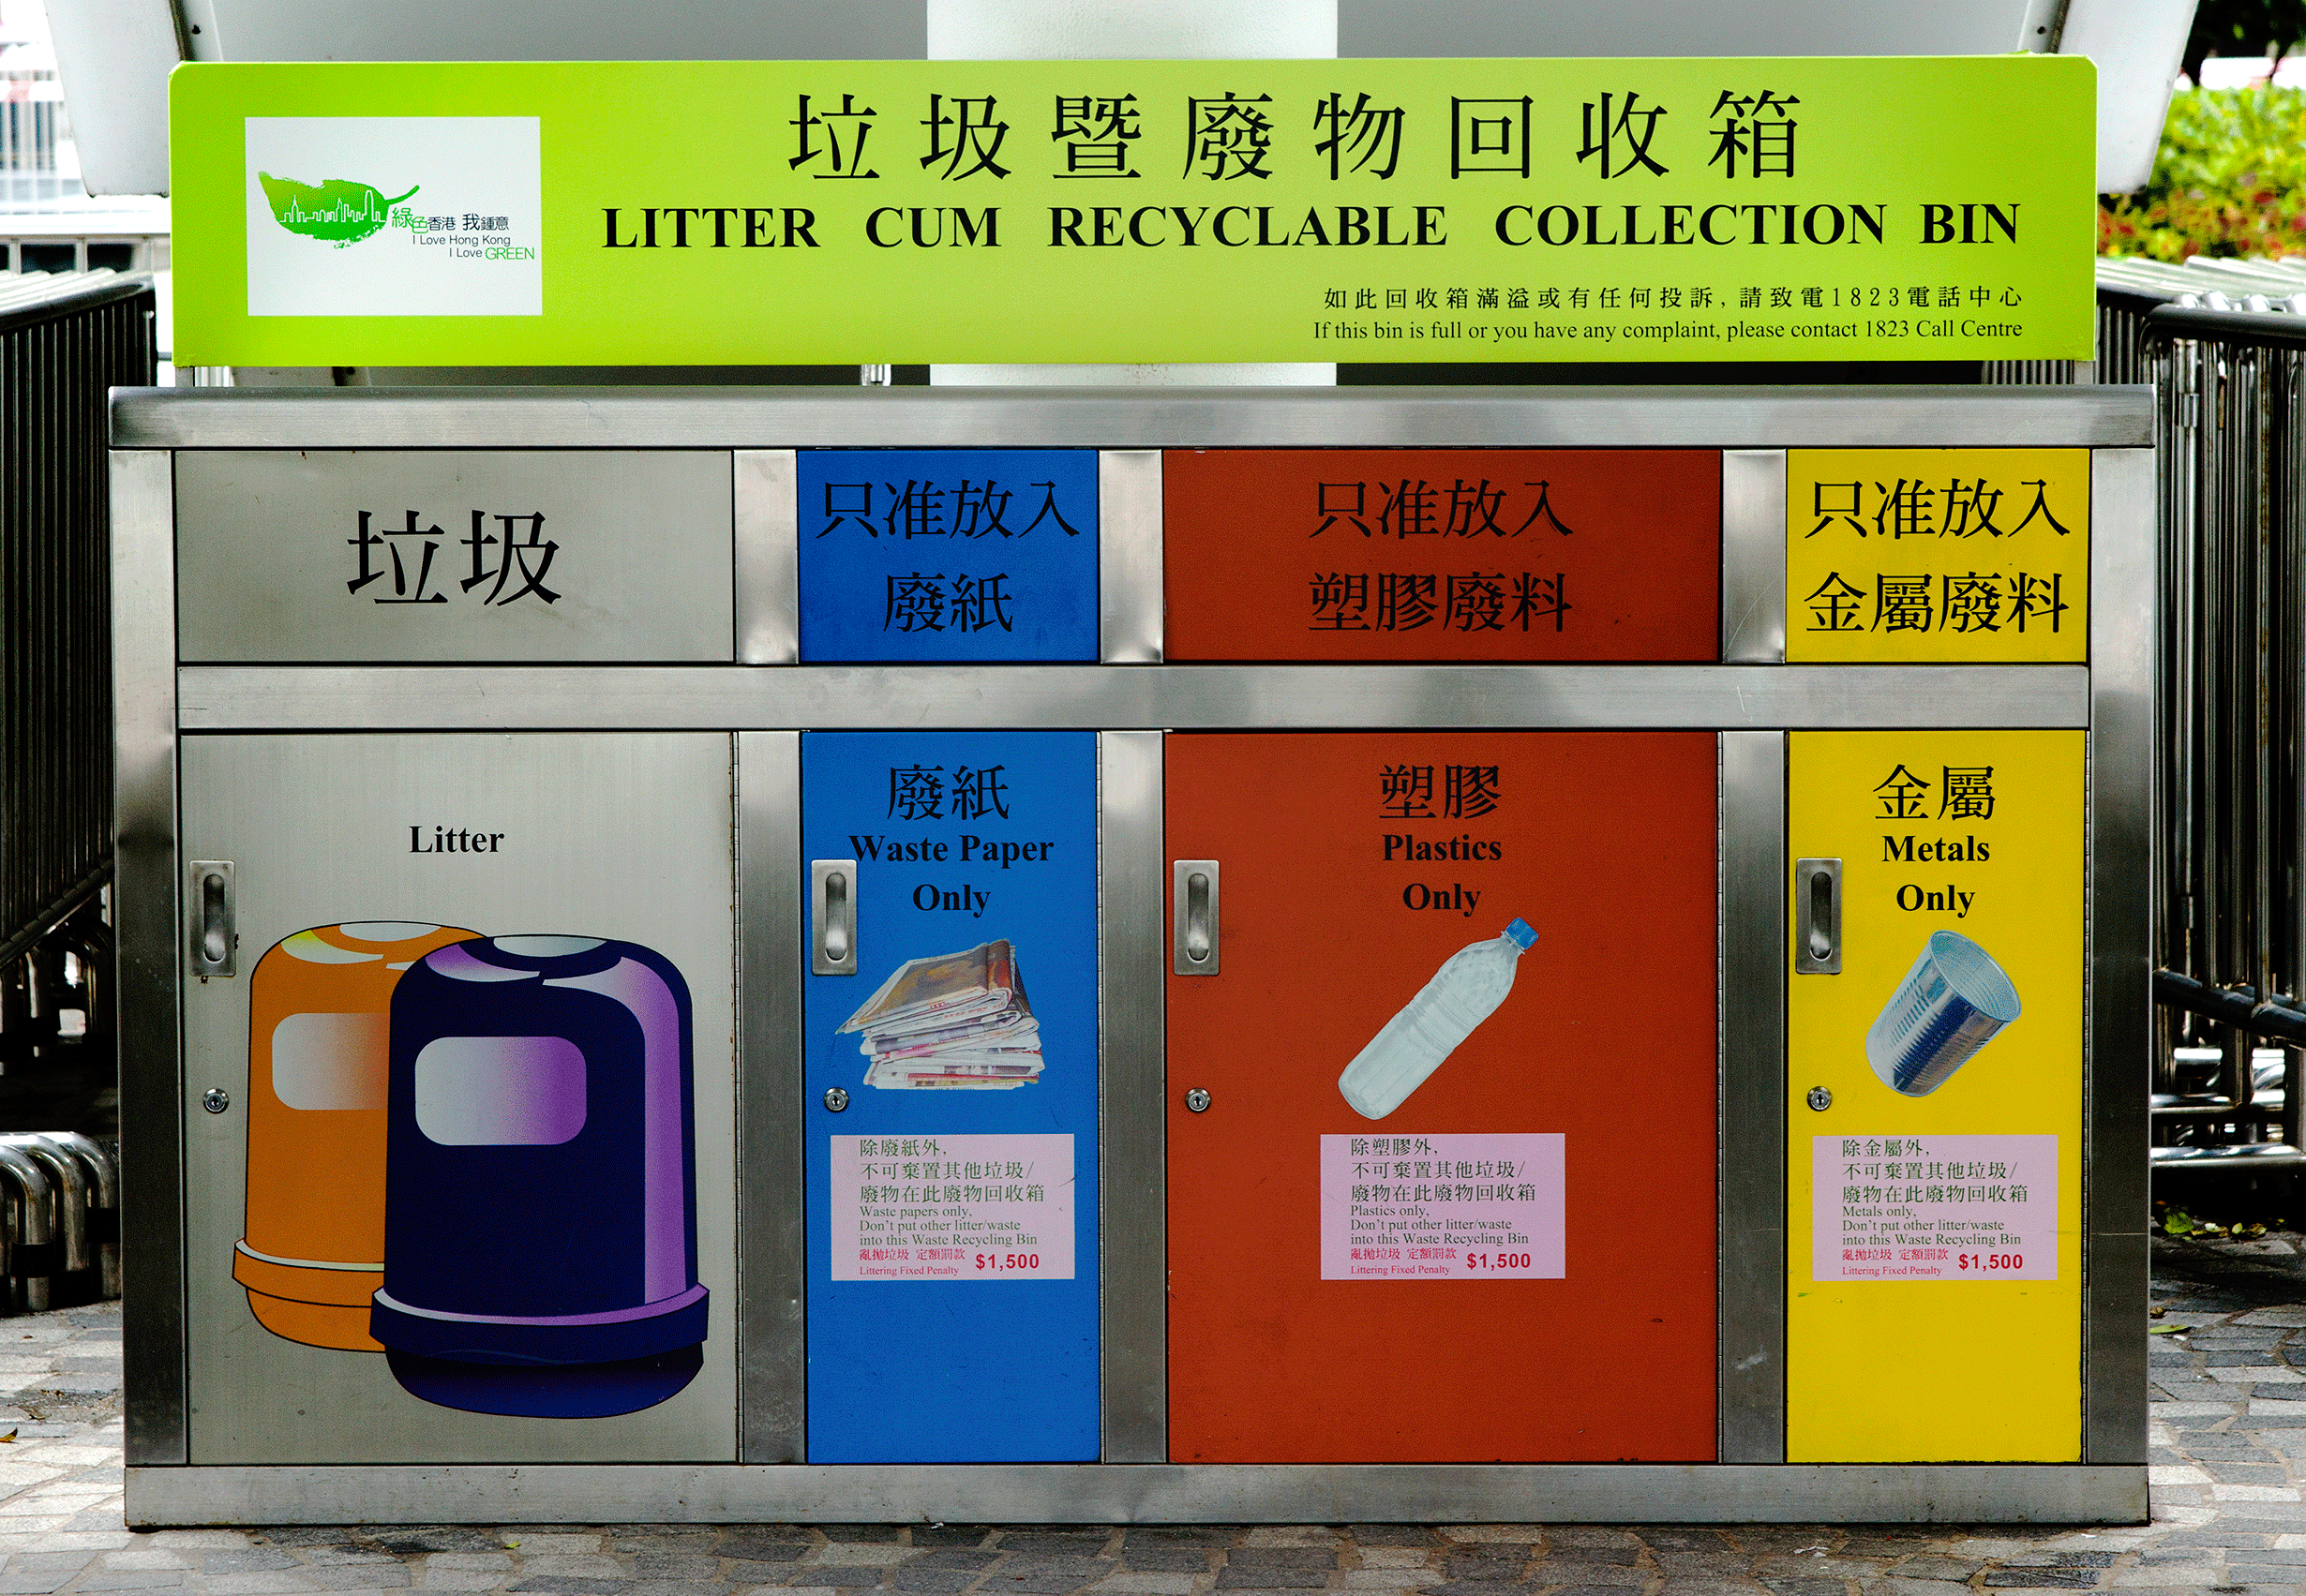 Reducing plastic bag usage in hong kong environmental sciences essay